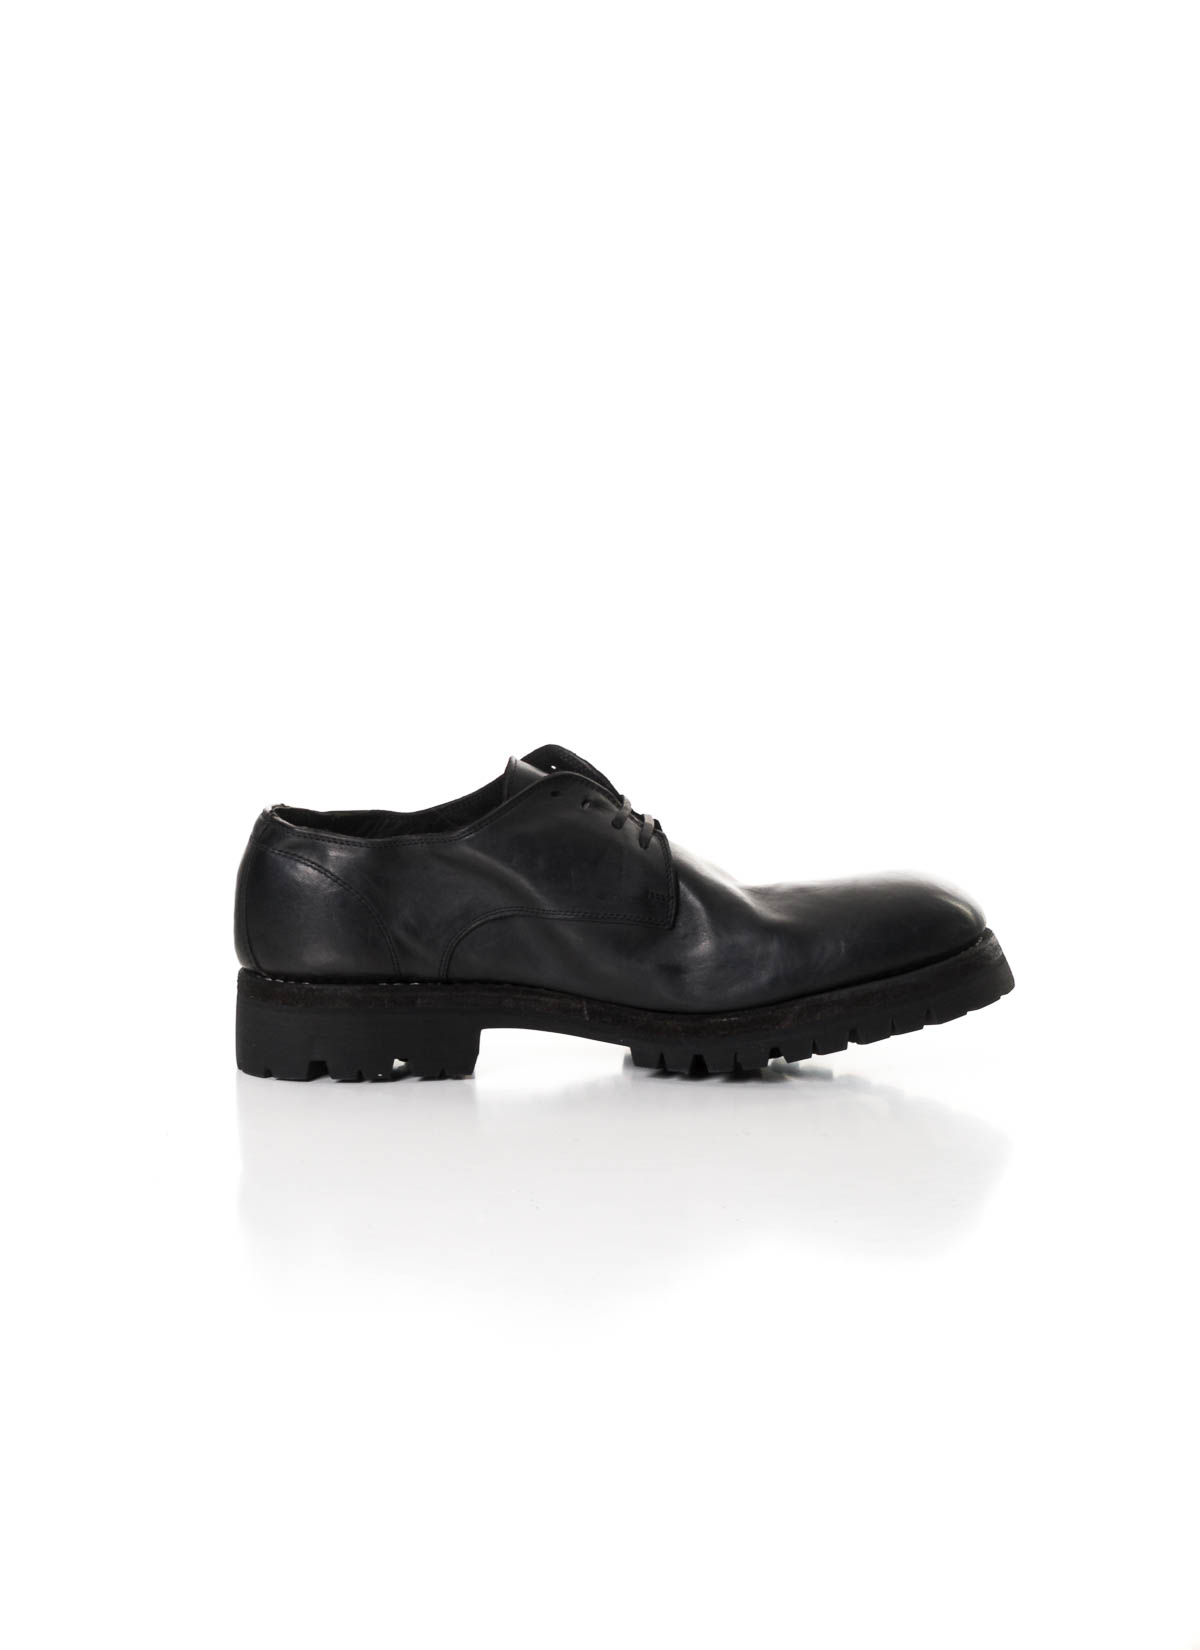 hide-m  GUIDI 792V, Classic Derby Shoe, black horse leather